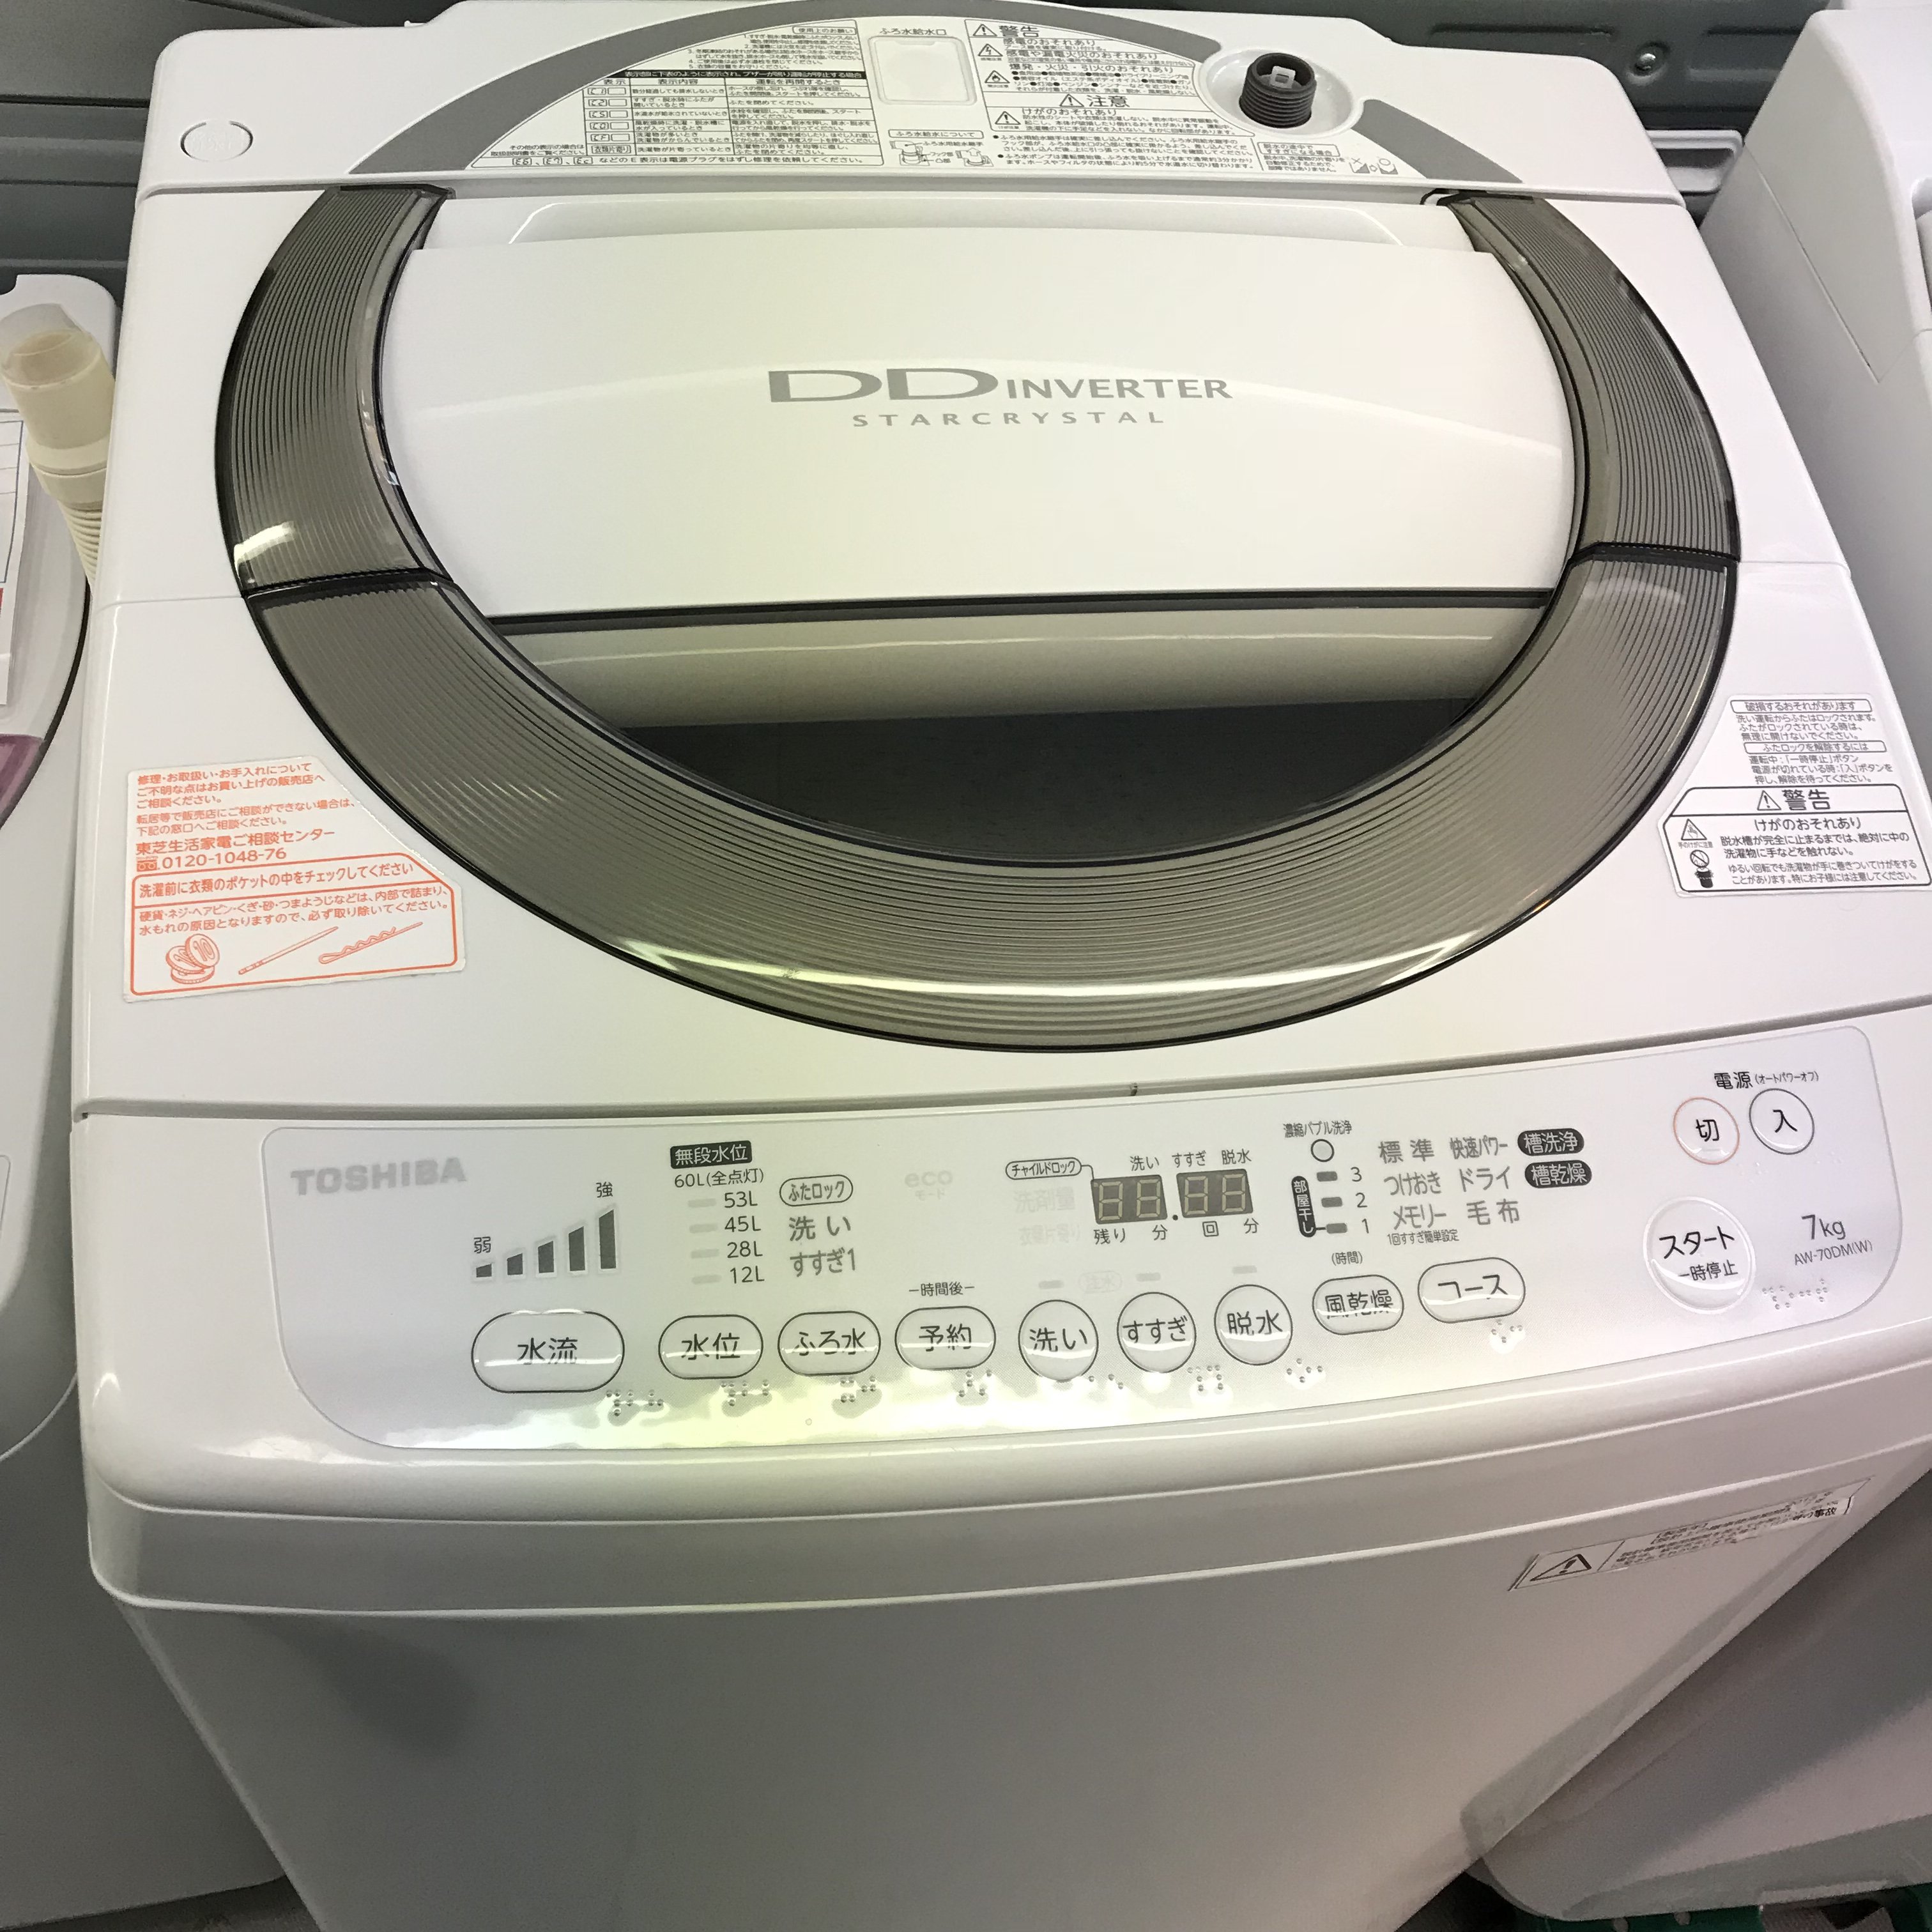 TOSHIBA 洗濯機 7kg-